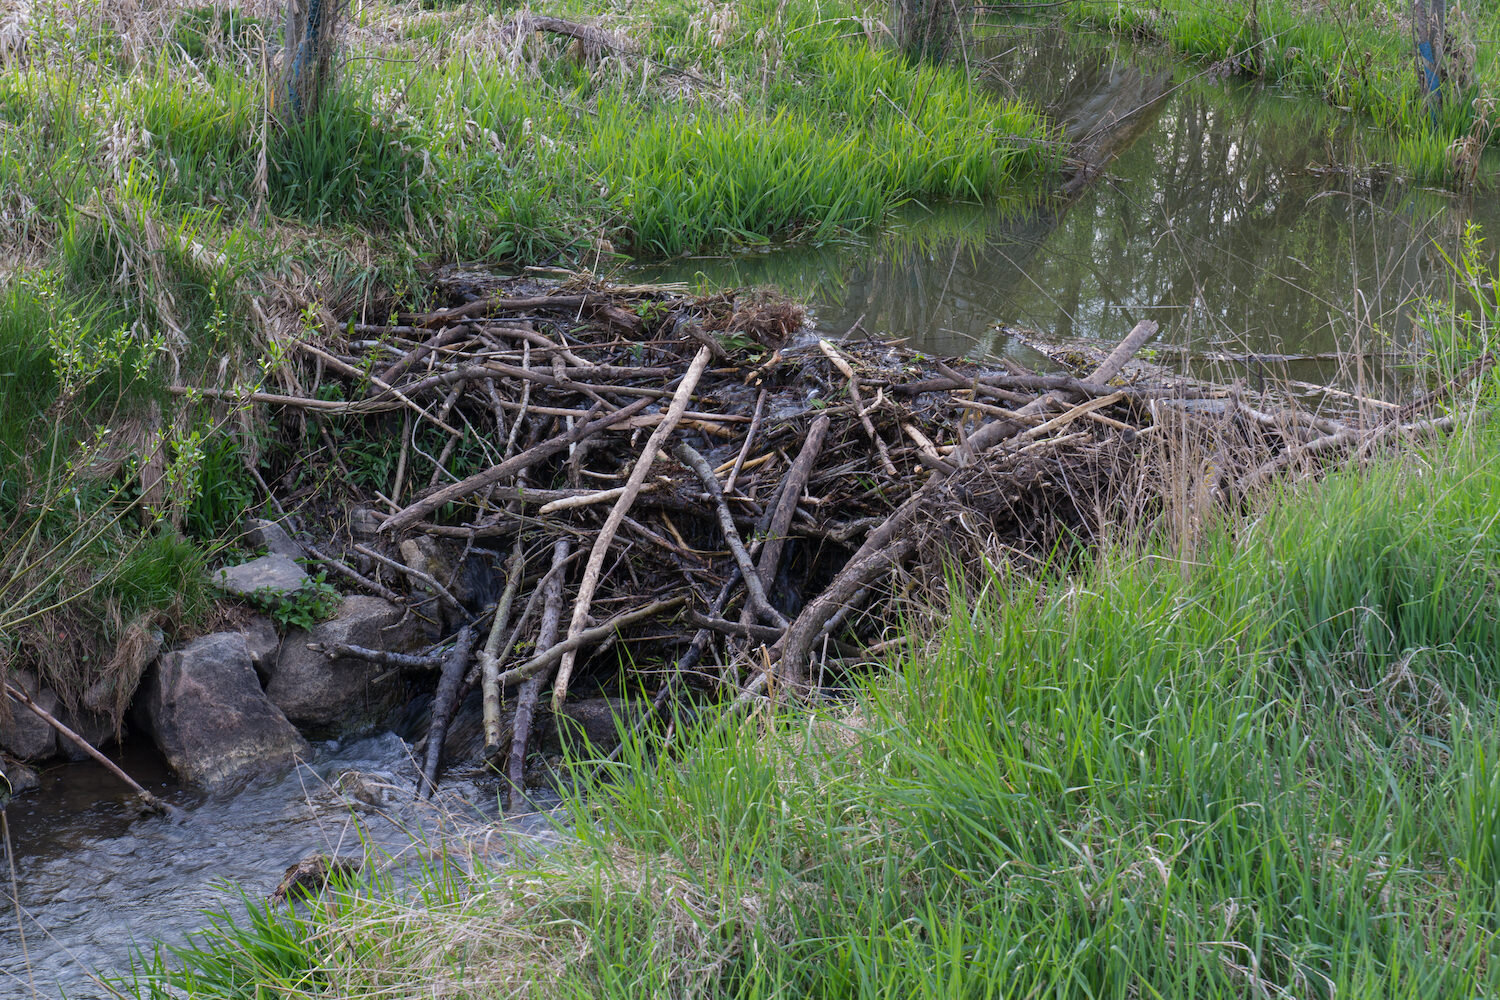 Beaver creek nudist kamas